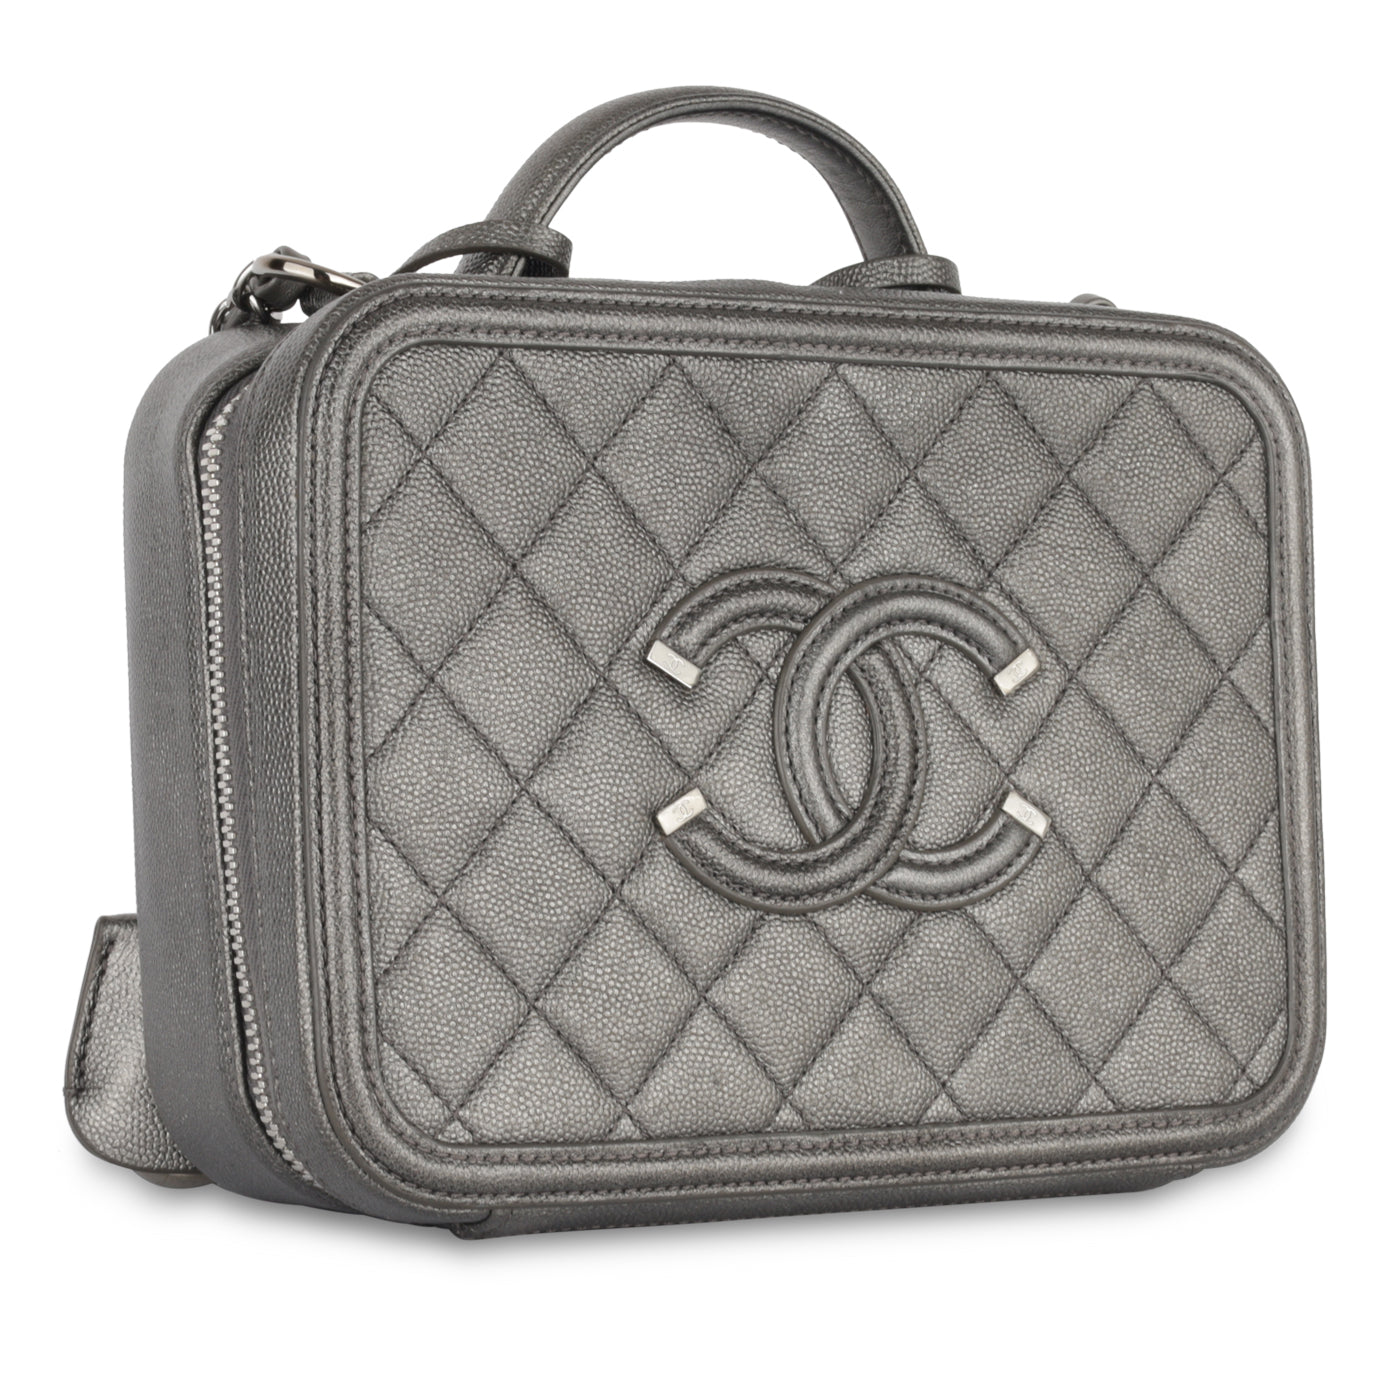 Chanel - Medium Filigree CC Vanity Case - Metallic Silver Caviar - RHW